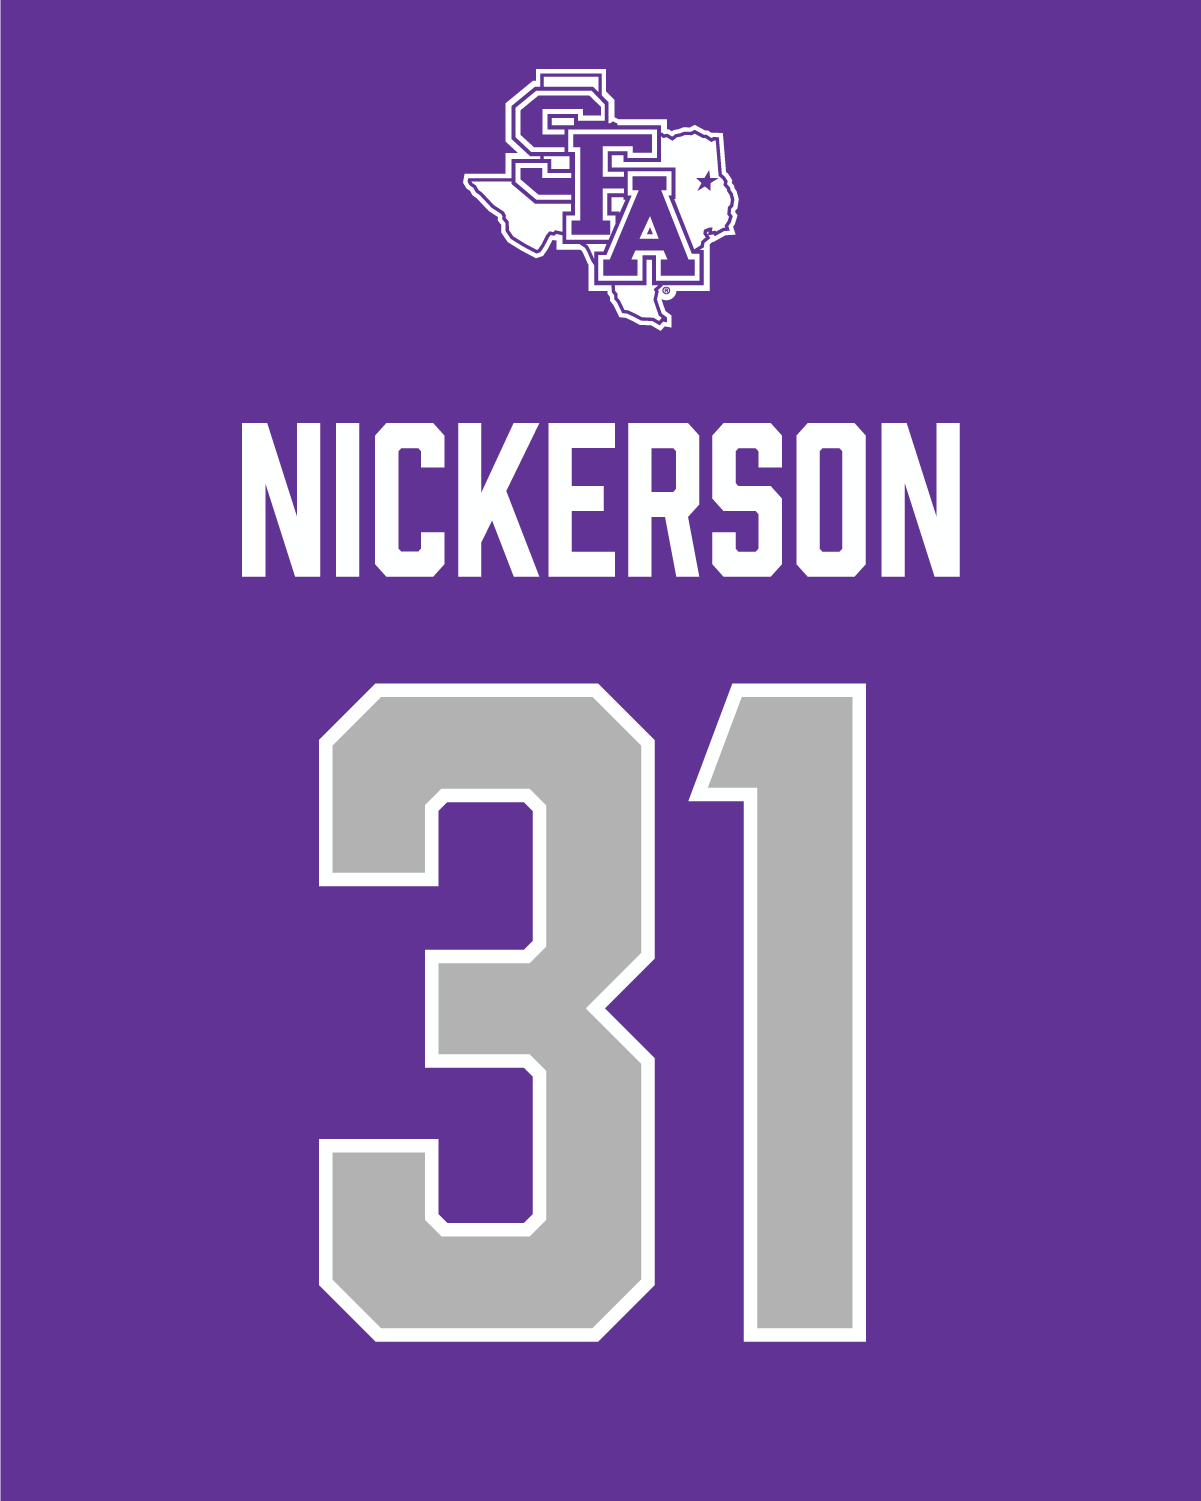 Trent Nickerson | #31